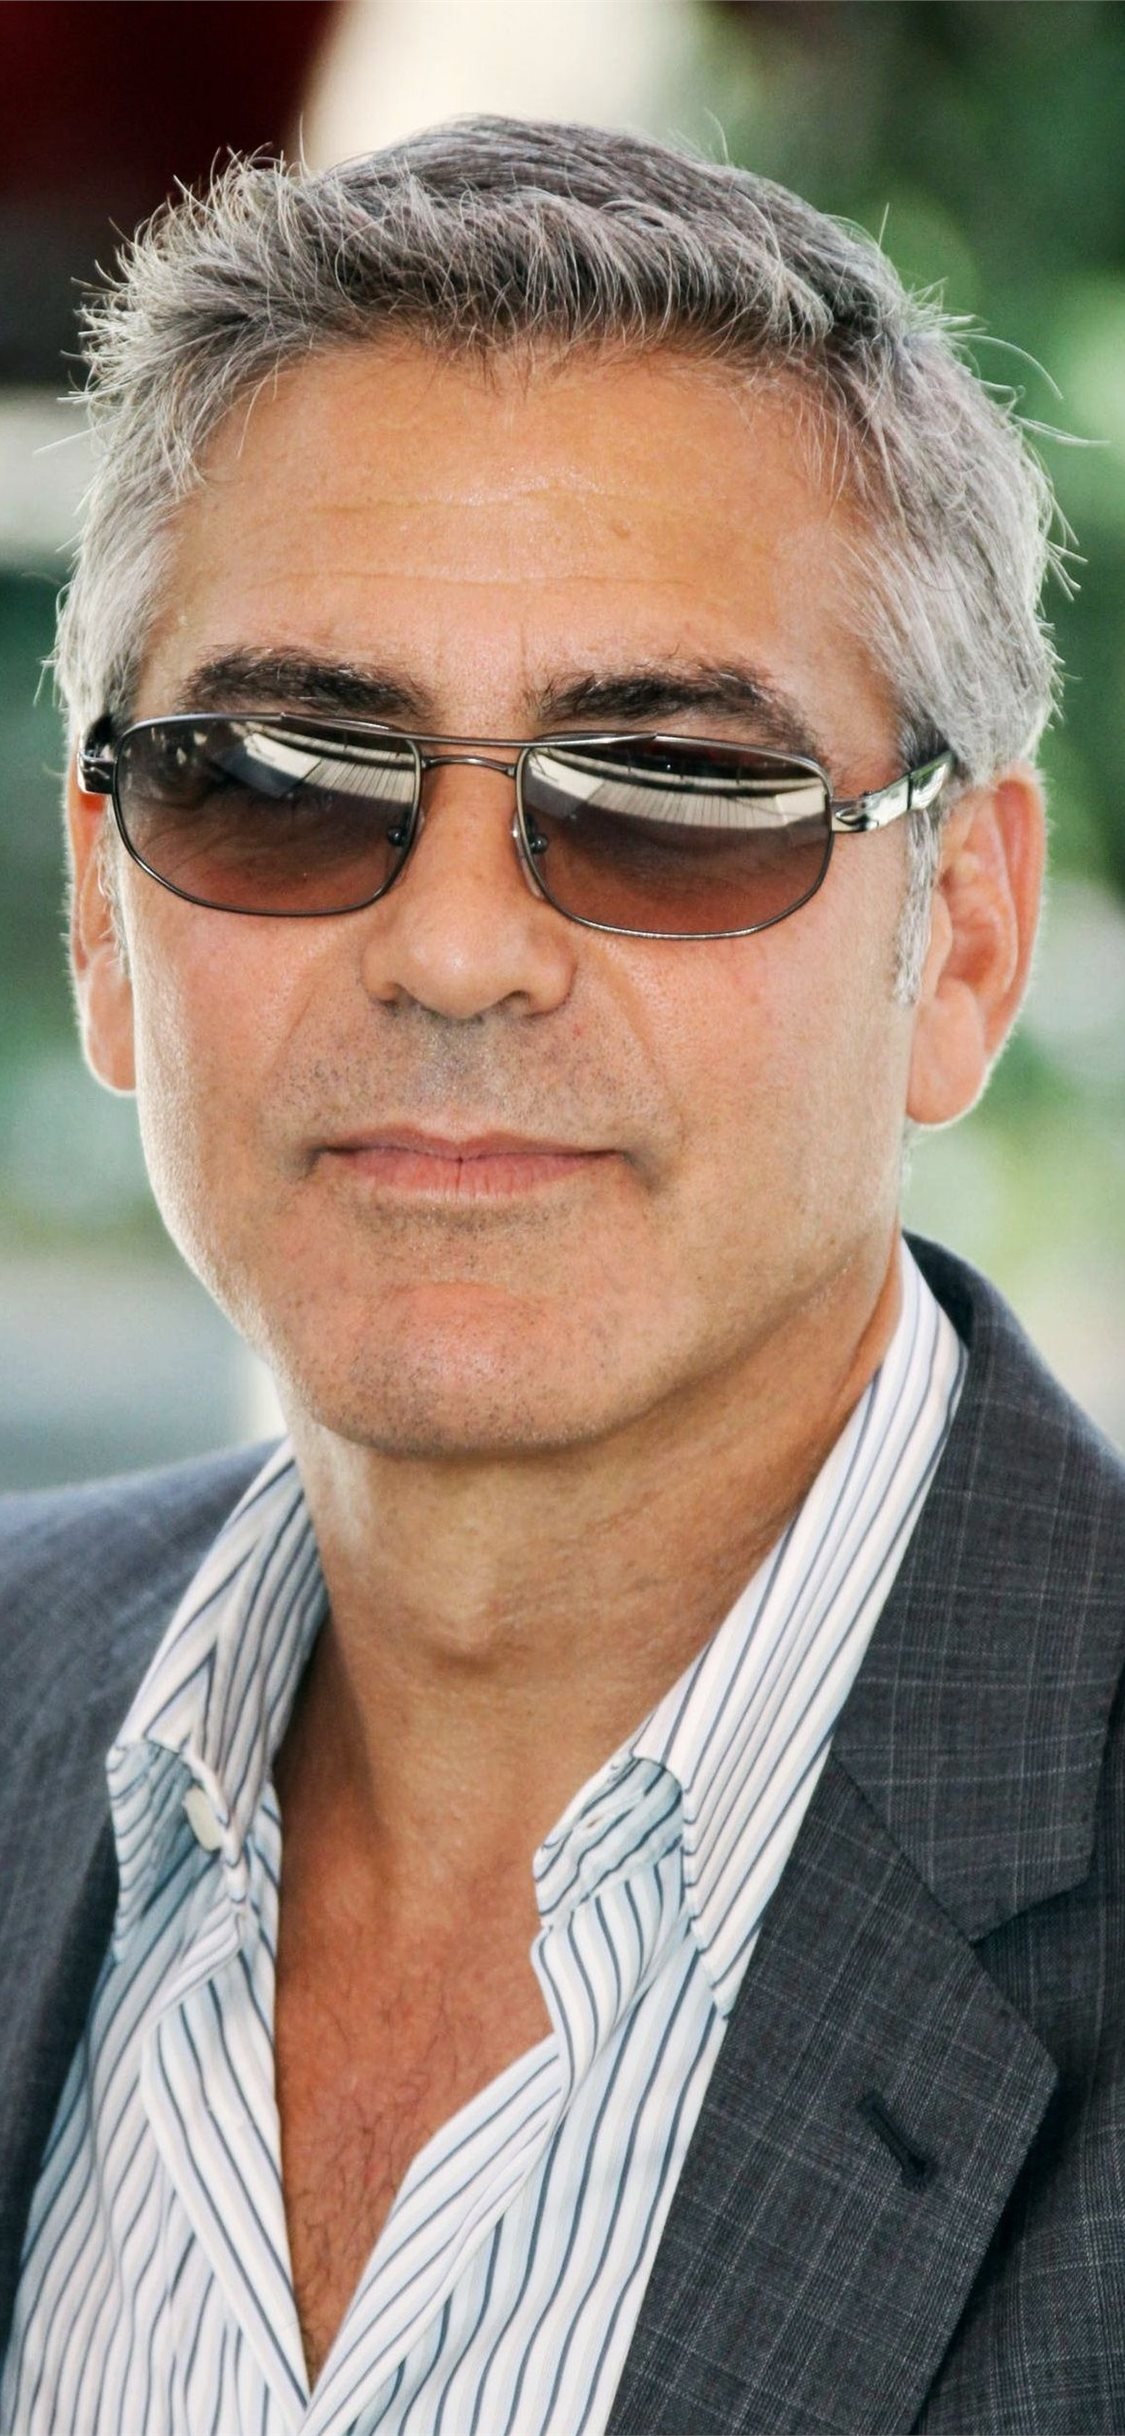 George Clooney, Best iPhone HD wallpapers, Celebrity charm, Lock screen, 1130x2440 HD Handy